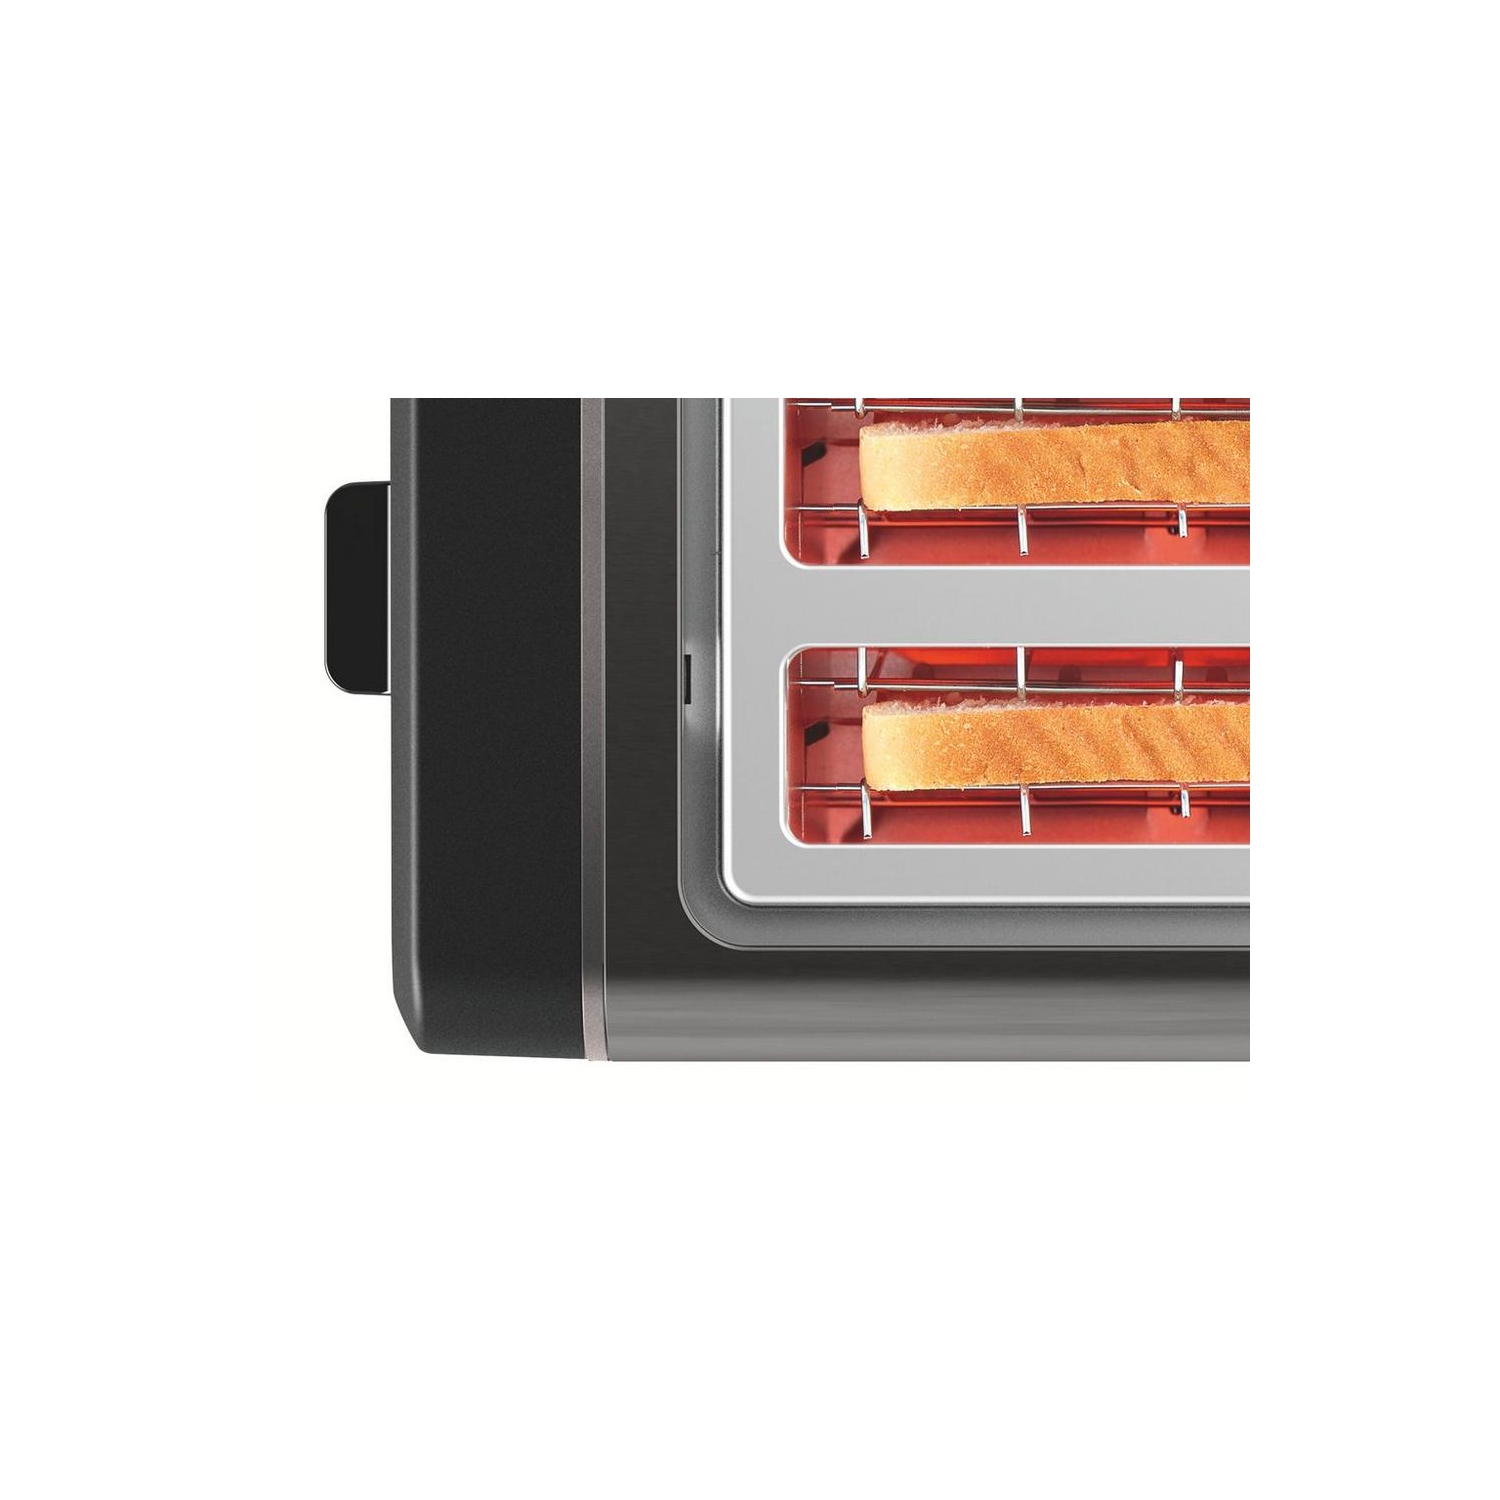 Bosch TAT5P445GB 4 Slice Toaster - Anthracite - 4